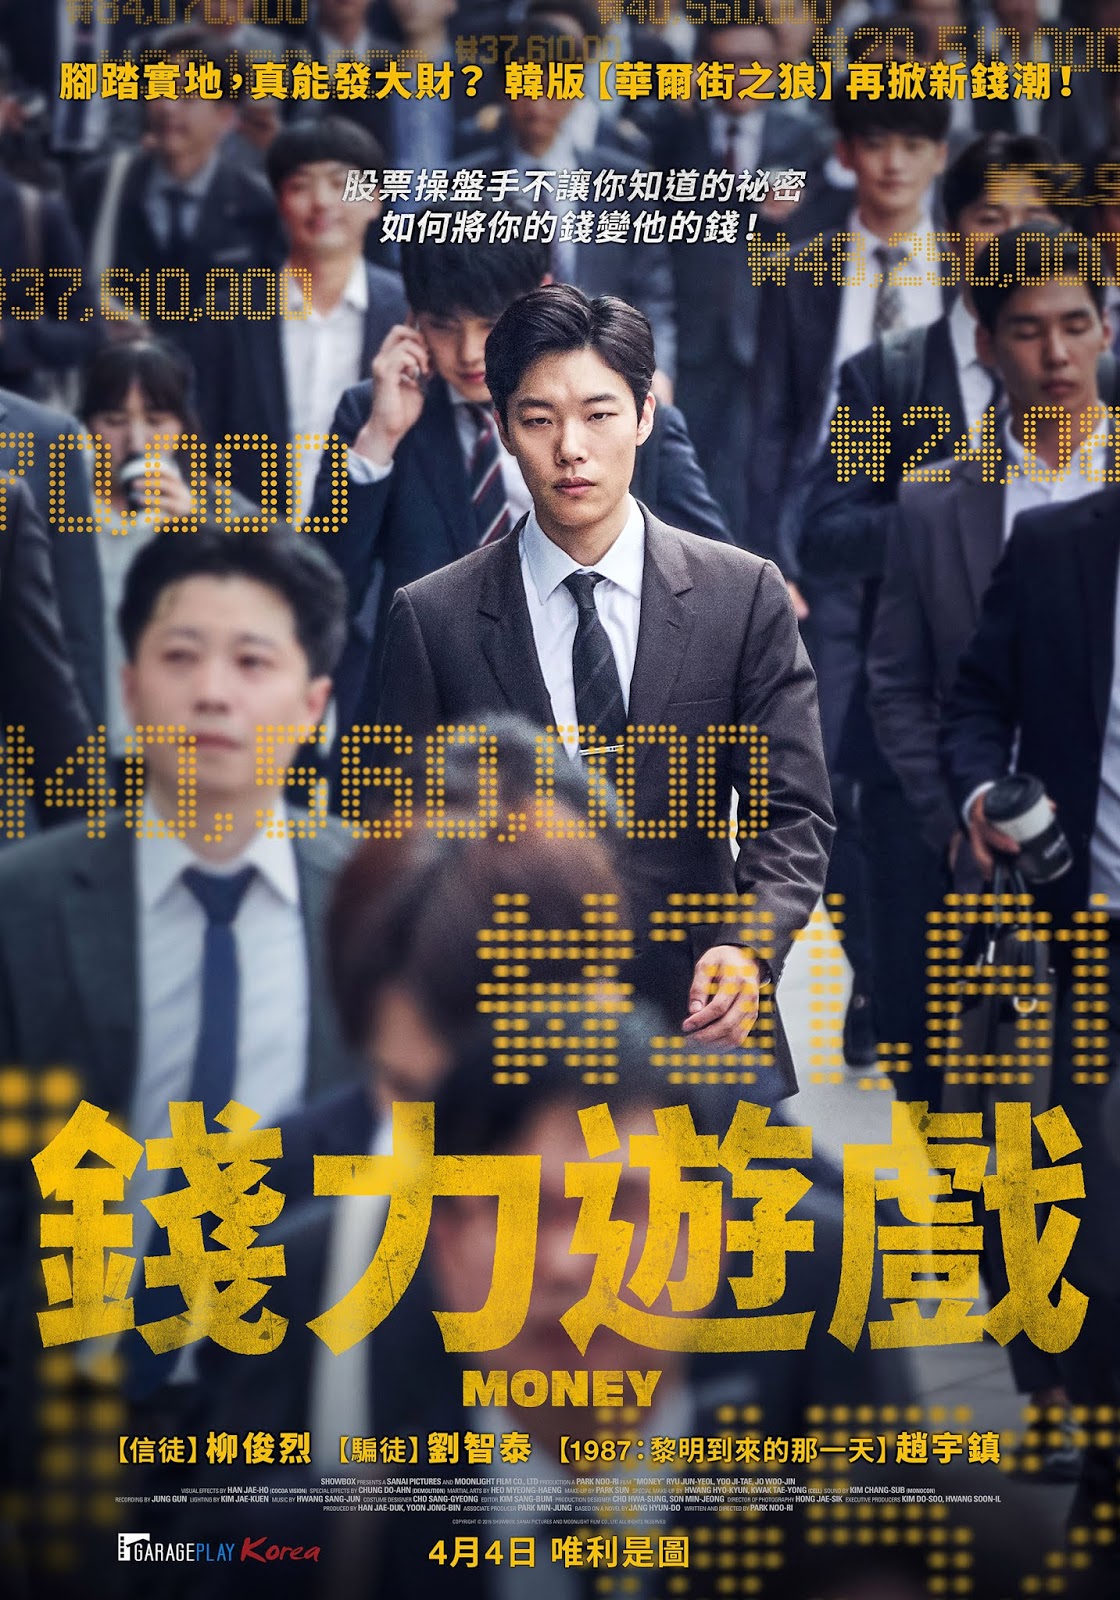 Adm廣告雜誌 Digital X Creative 電影分享 韓國電影都是真的 錢力遊戲 大曝金融犯罪內幕原來這些人都做過